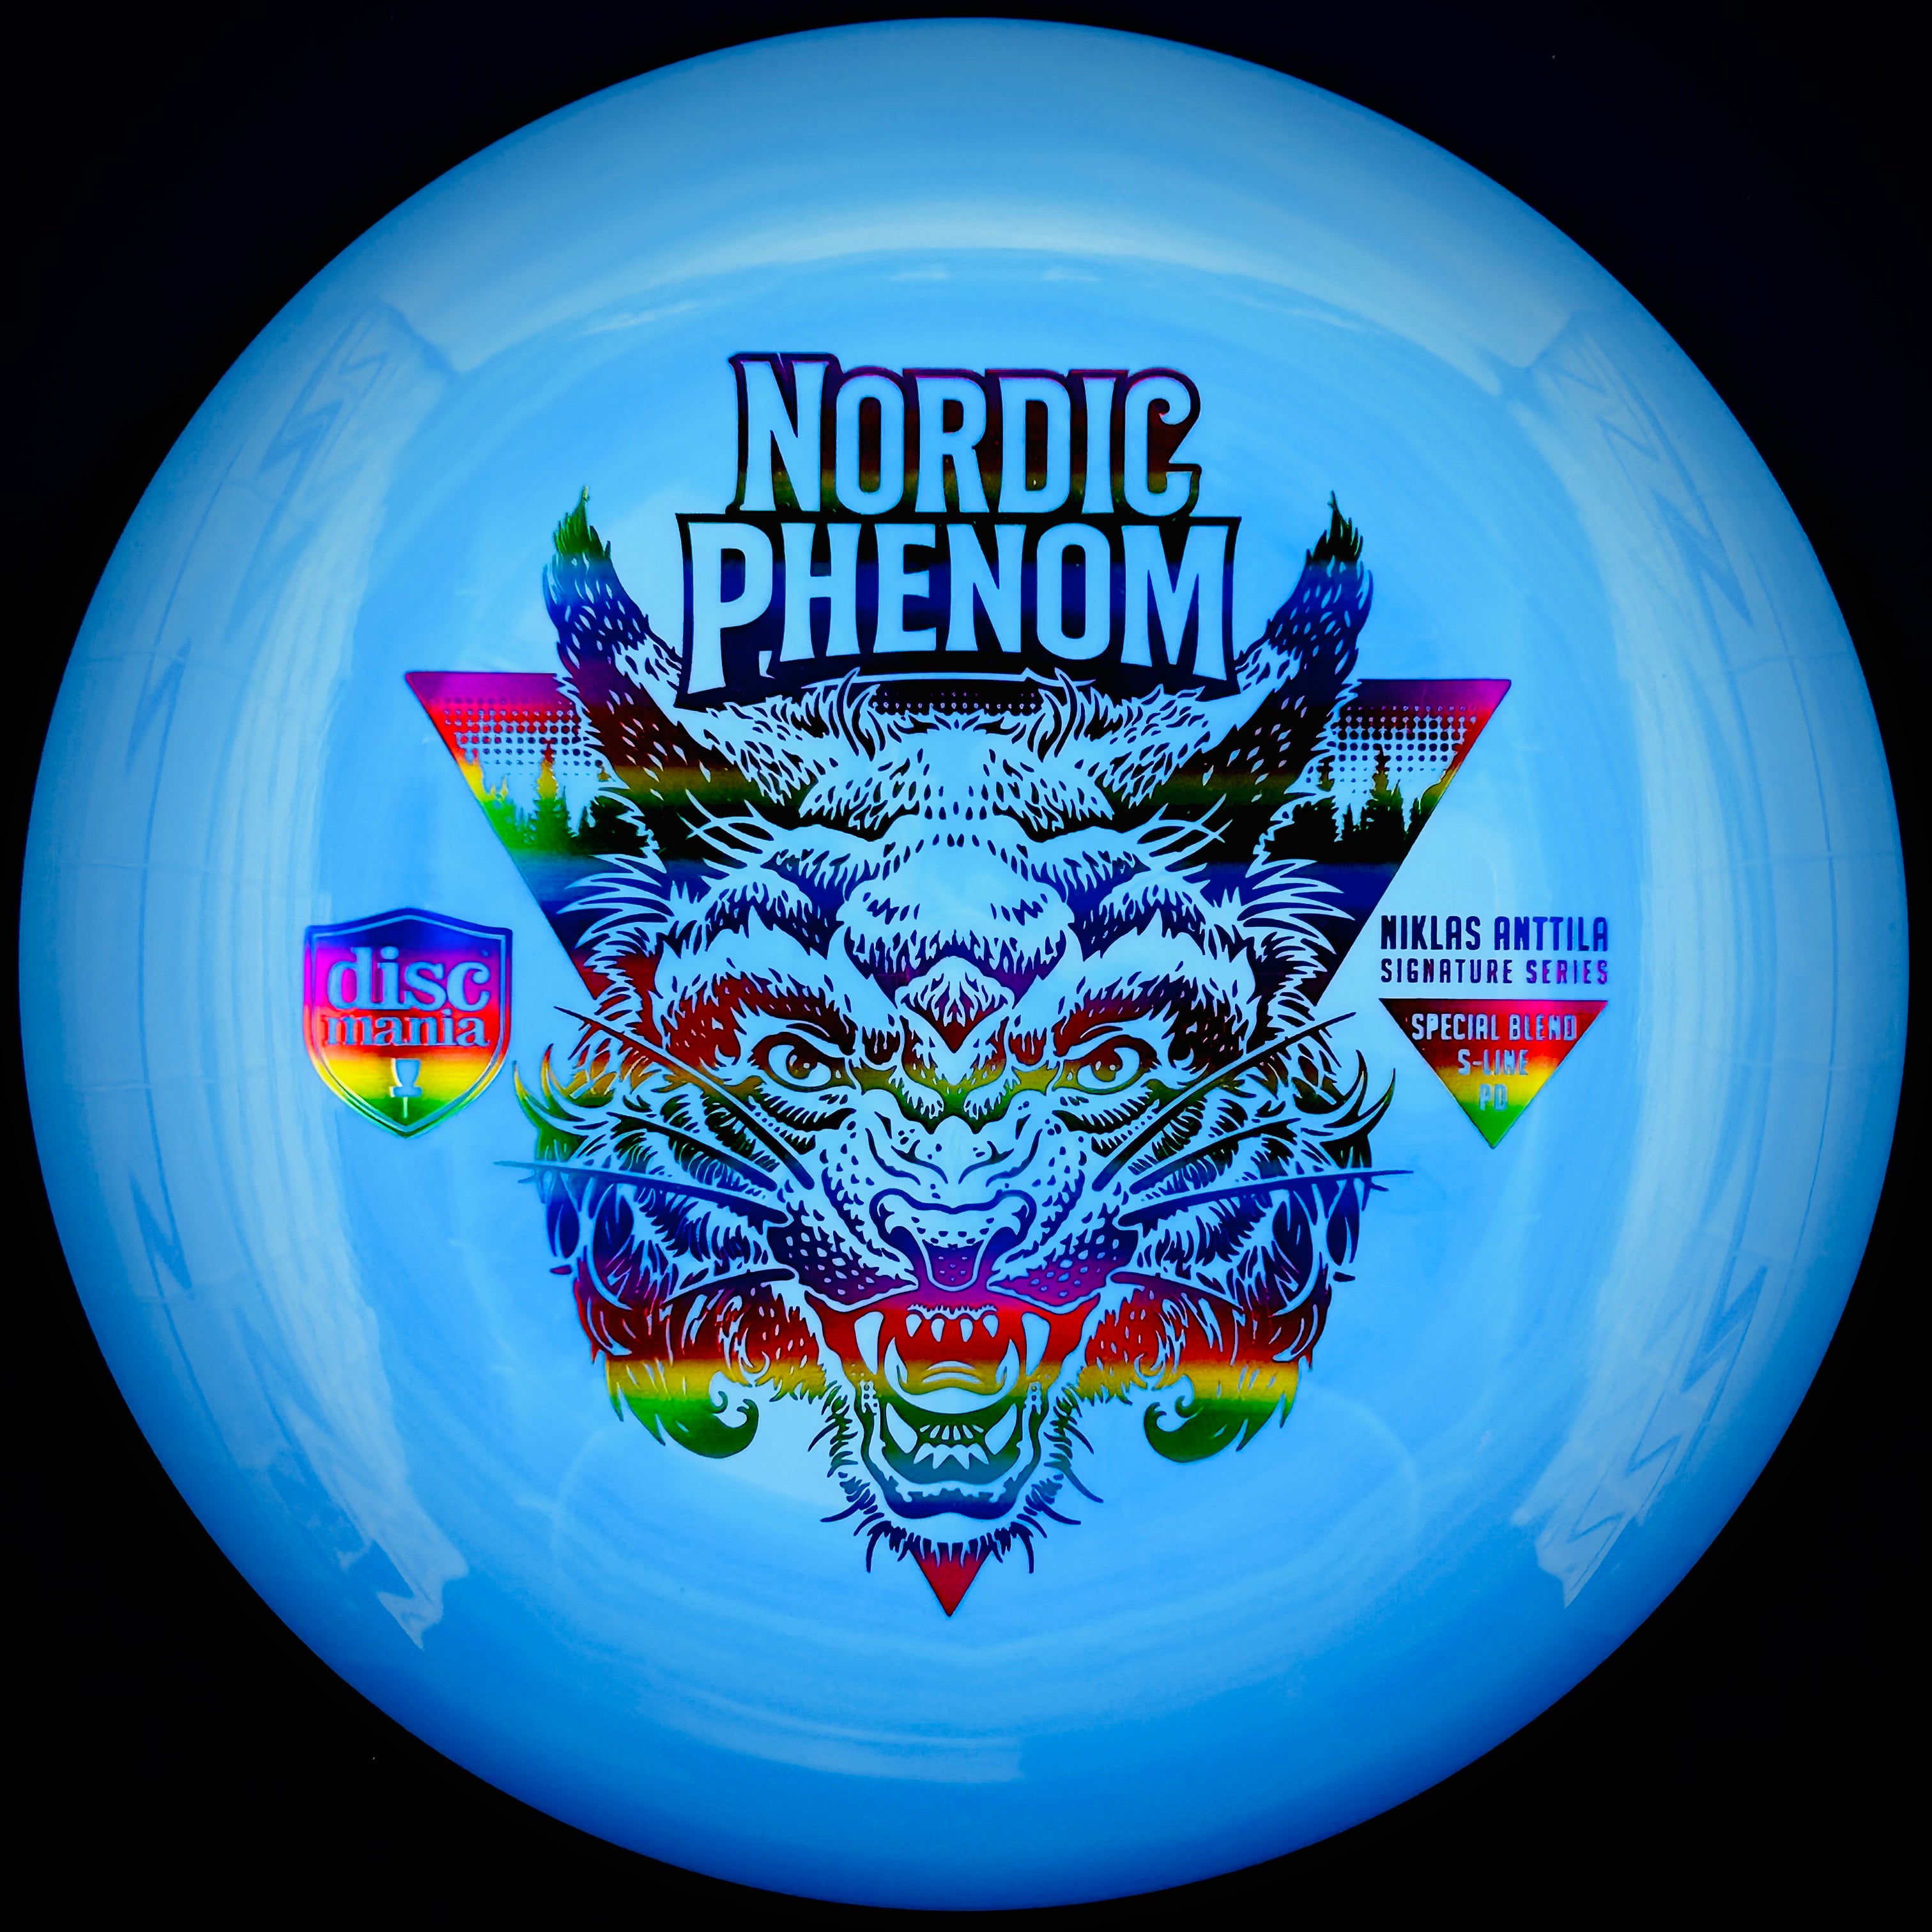 Discmania Nordic Phenom - Niklas Anttila Signature Series Special Blend S-Line PD